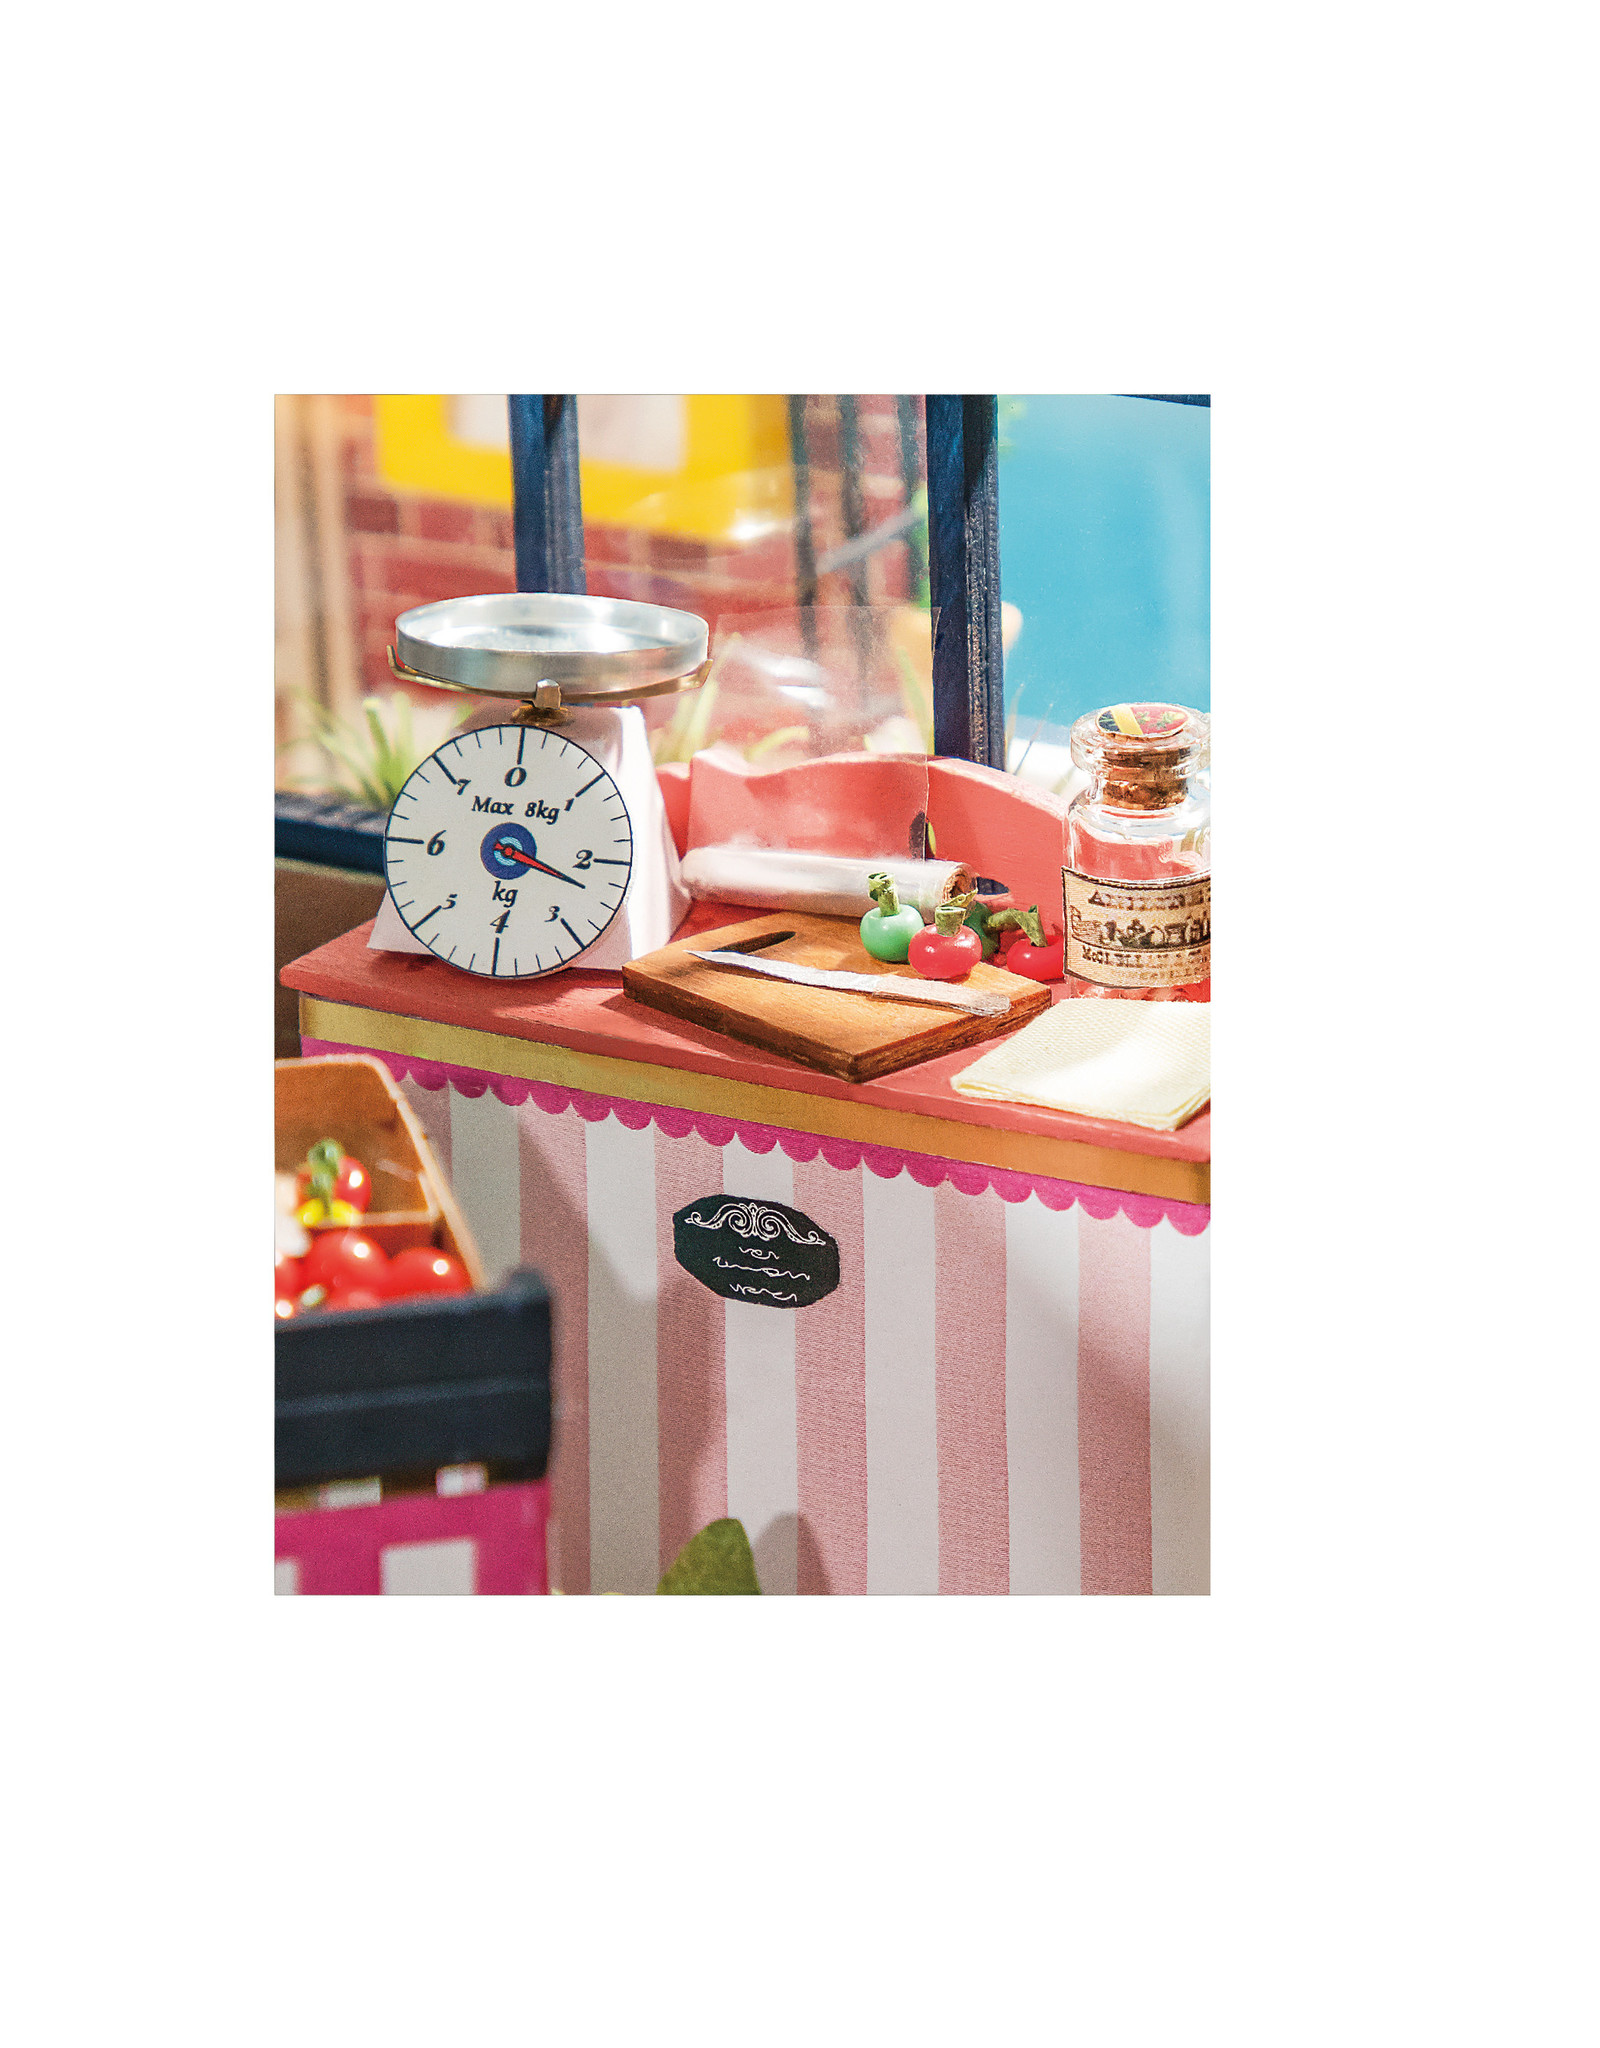 Rolife Carl’s Fruit Shop DG142 - Rolife DIY Miniature Dollhouse